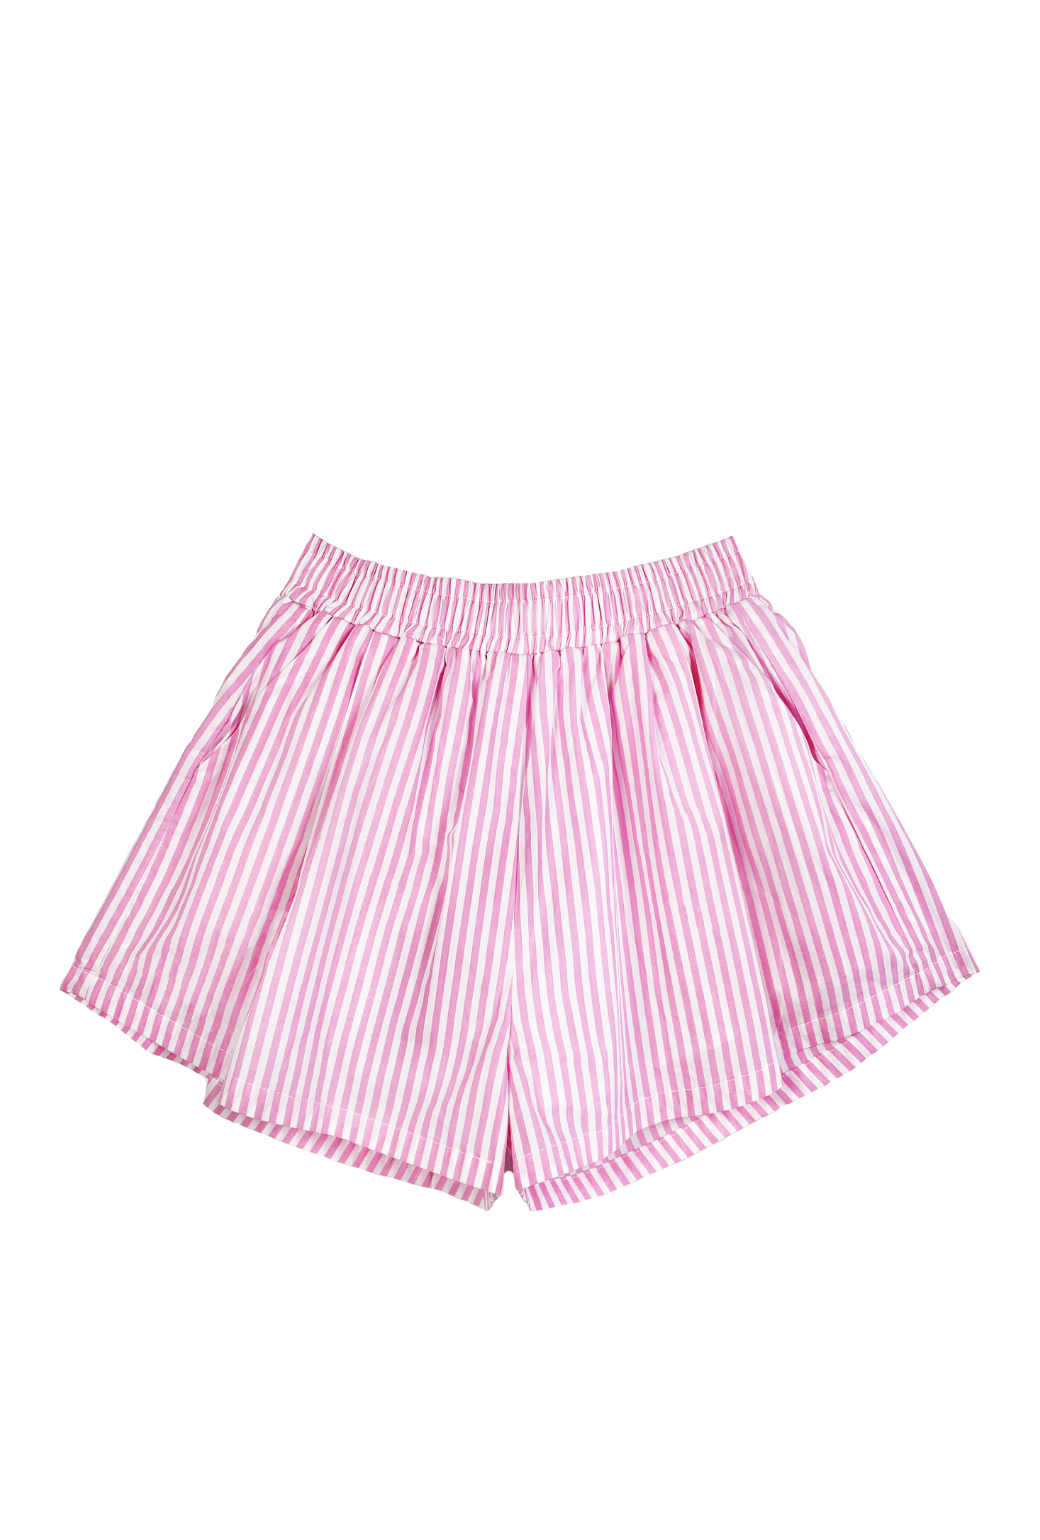 Everyday Shorts - Pink Stripe - Final Sale – BURU